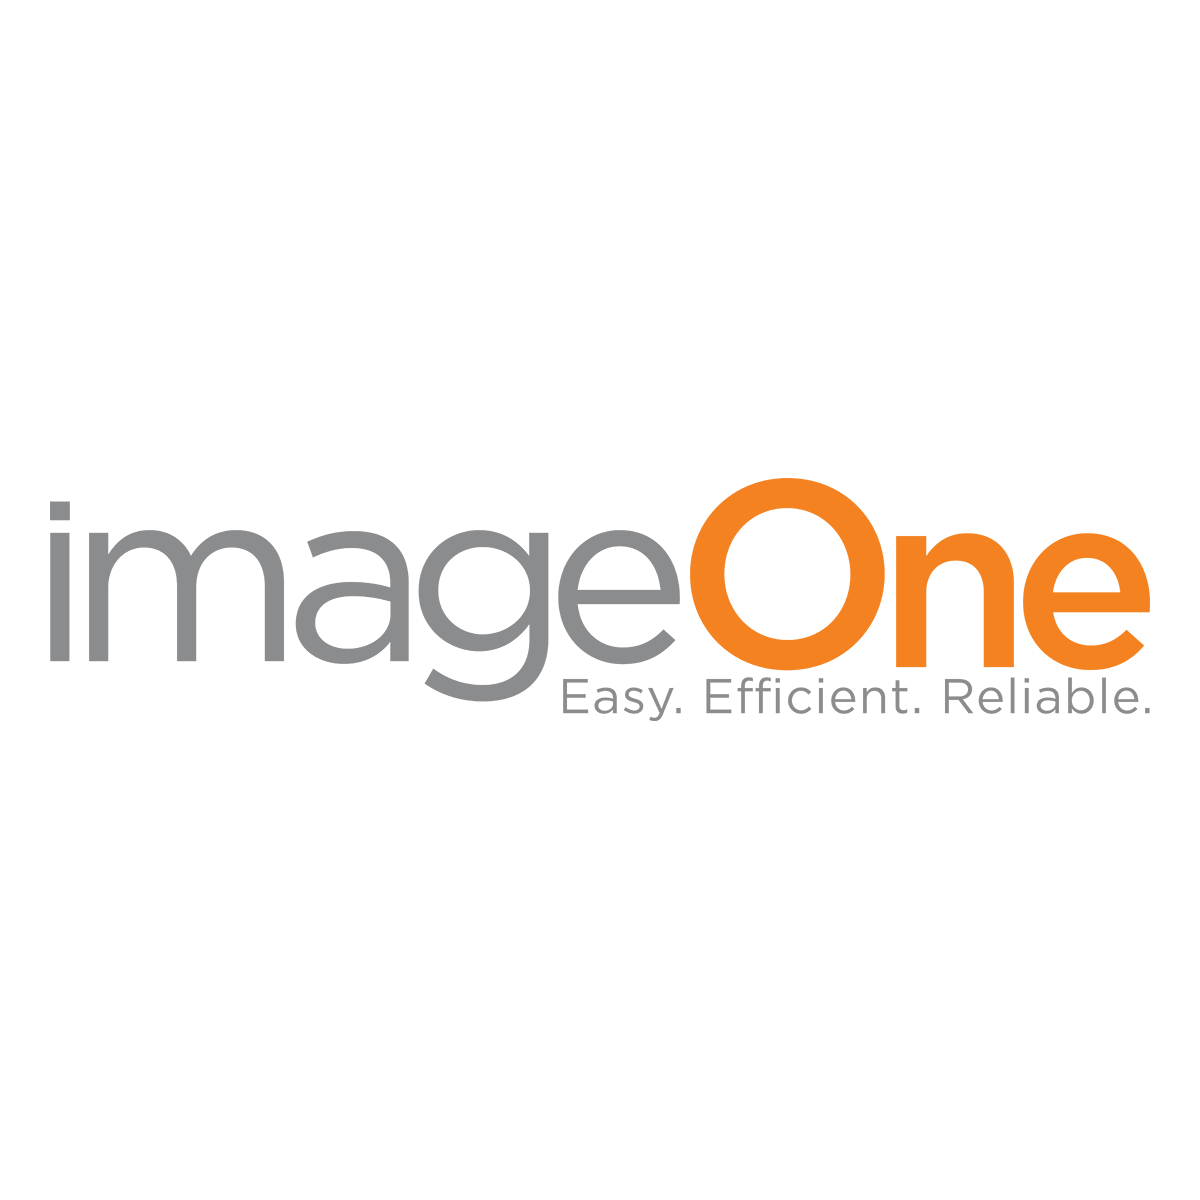 imageone logo